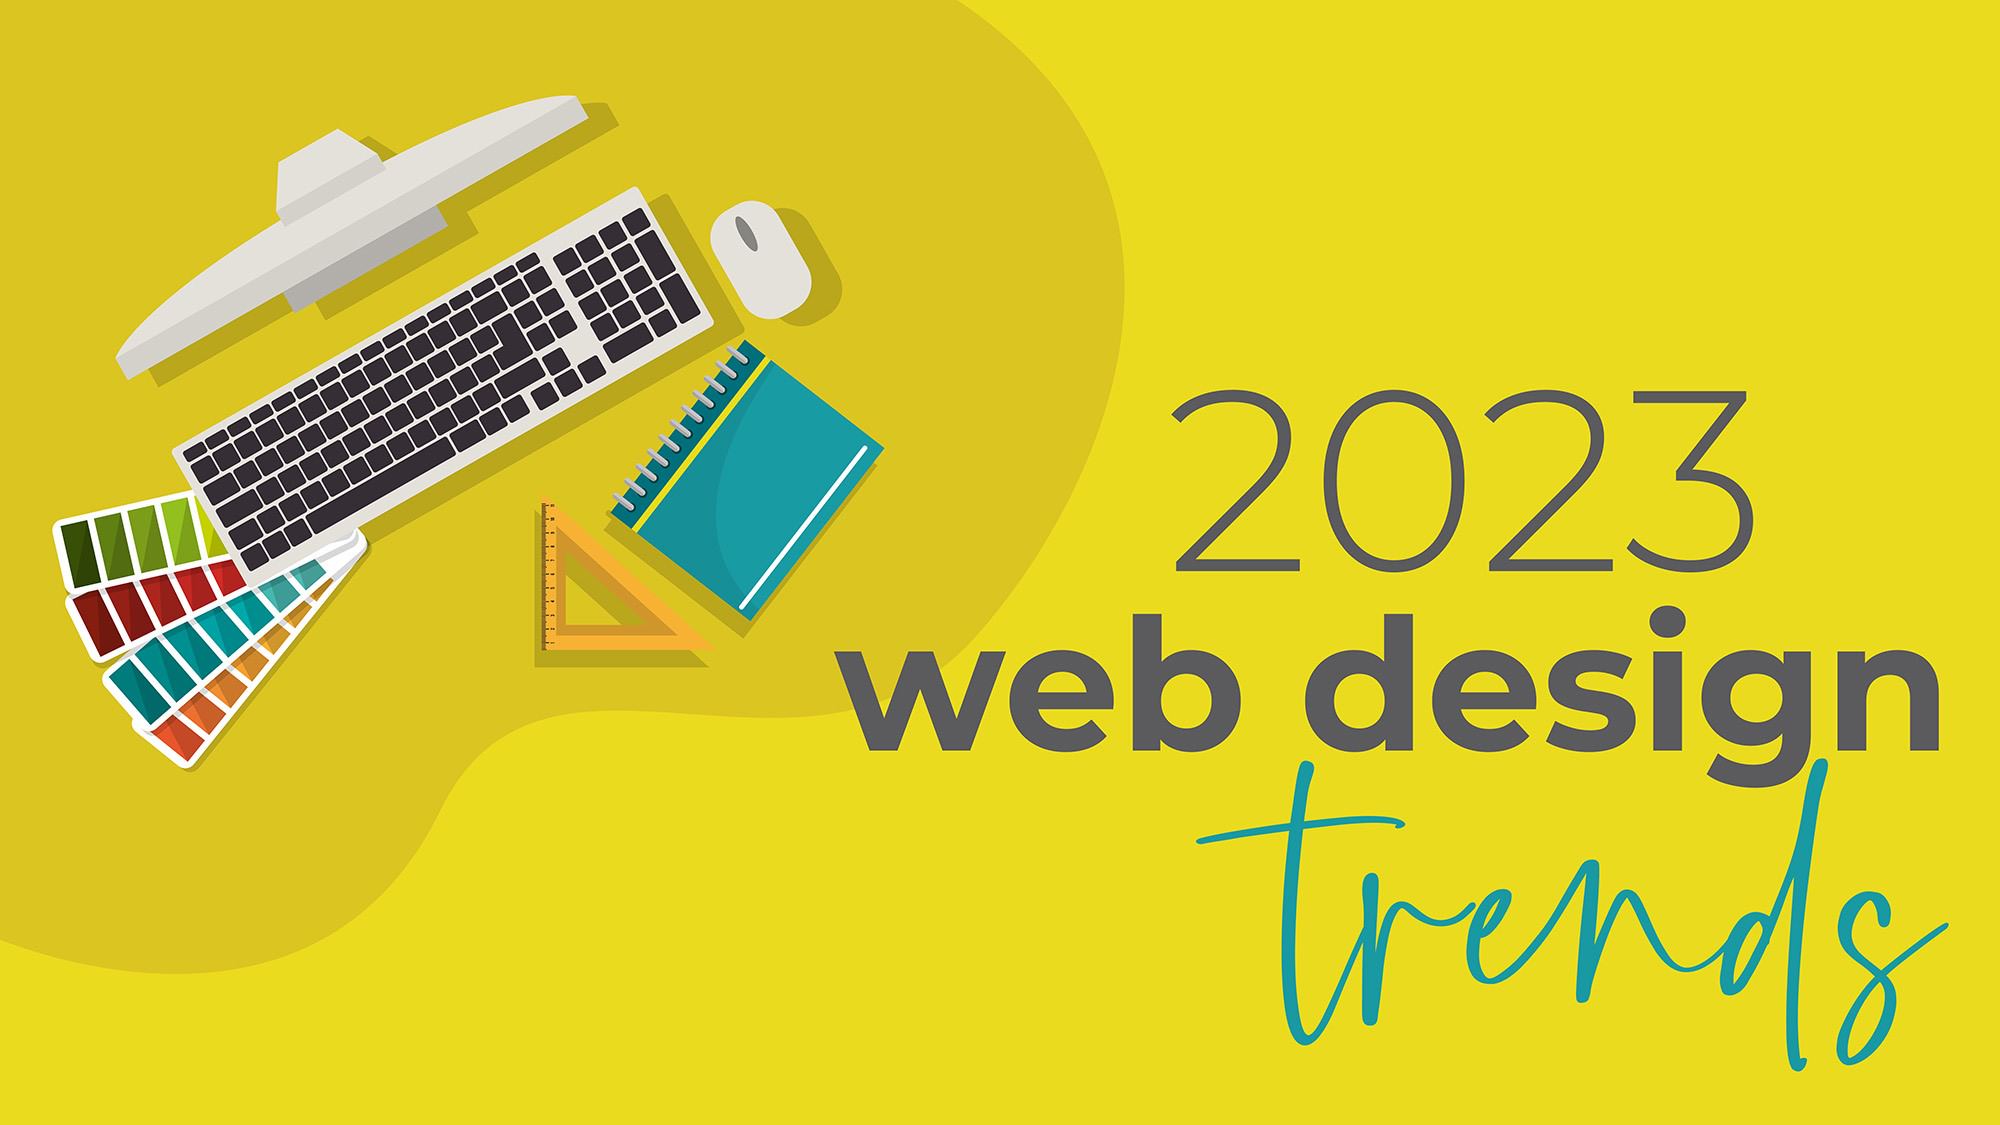 Web Design Trends for 2023